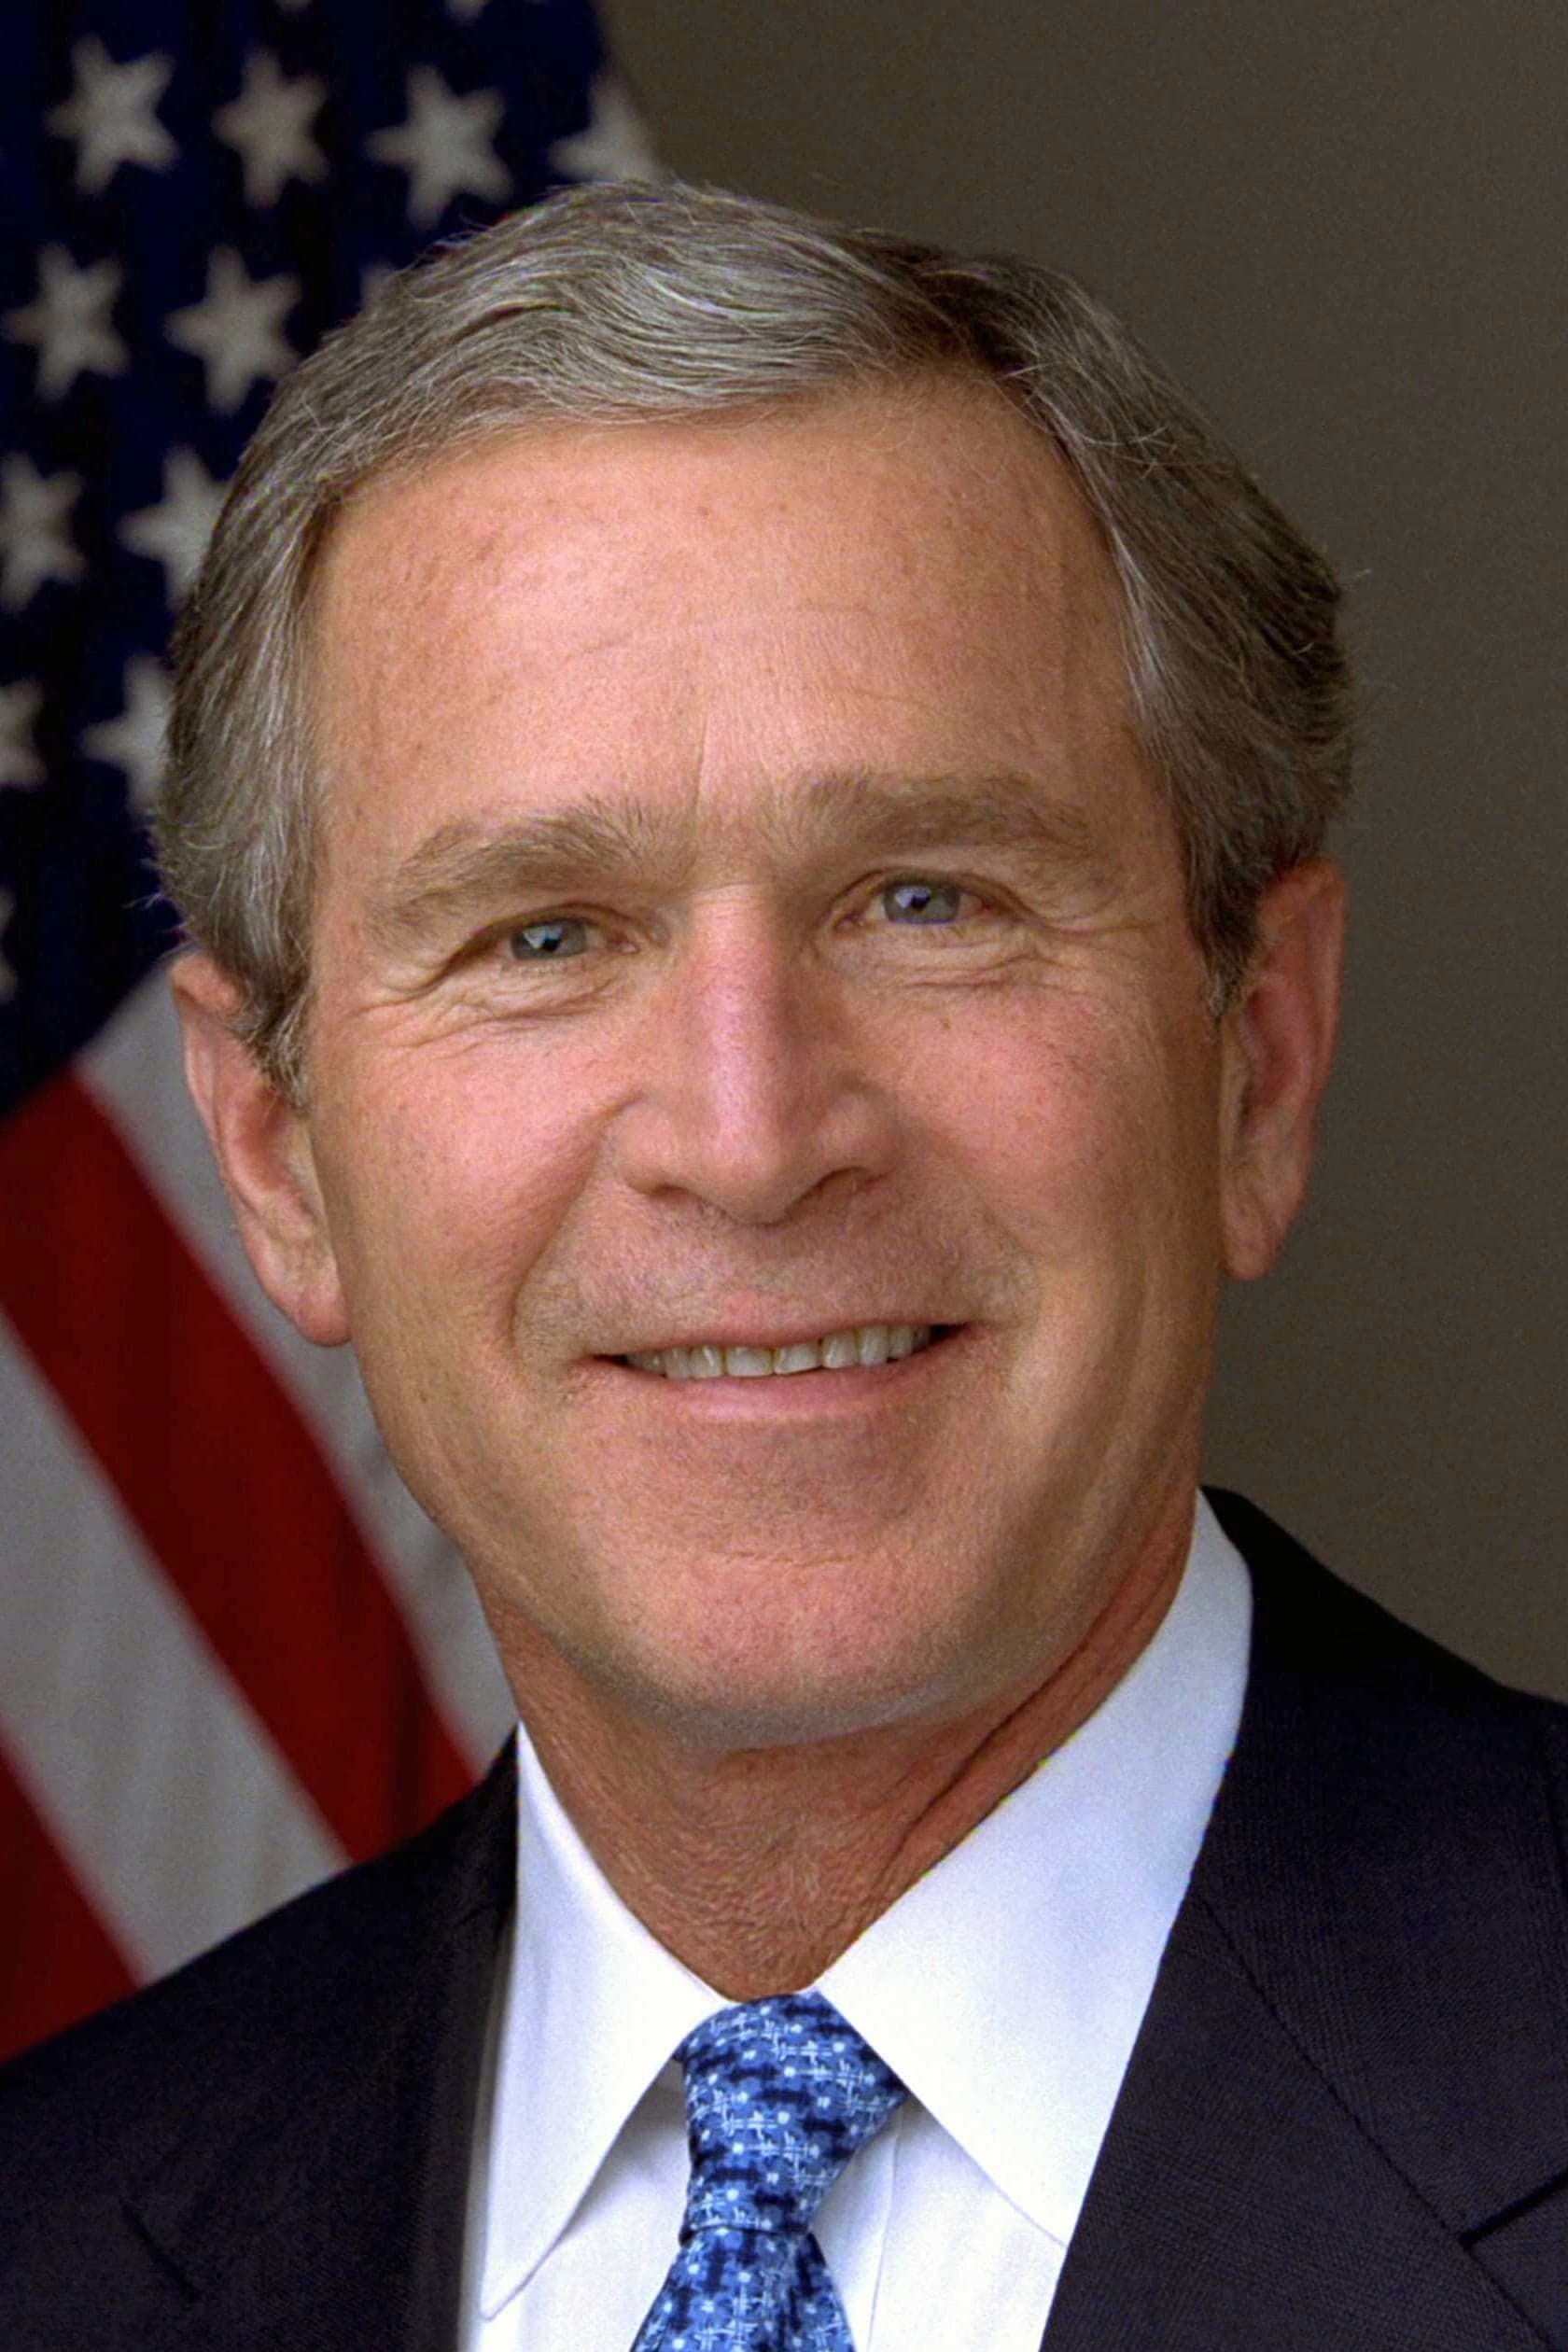 George W. Bush | Himself (archive footage)